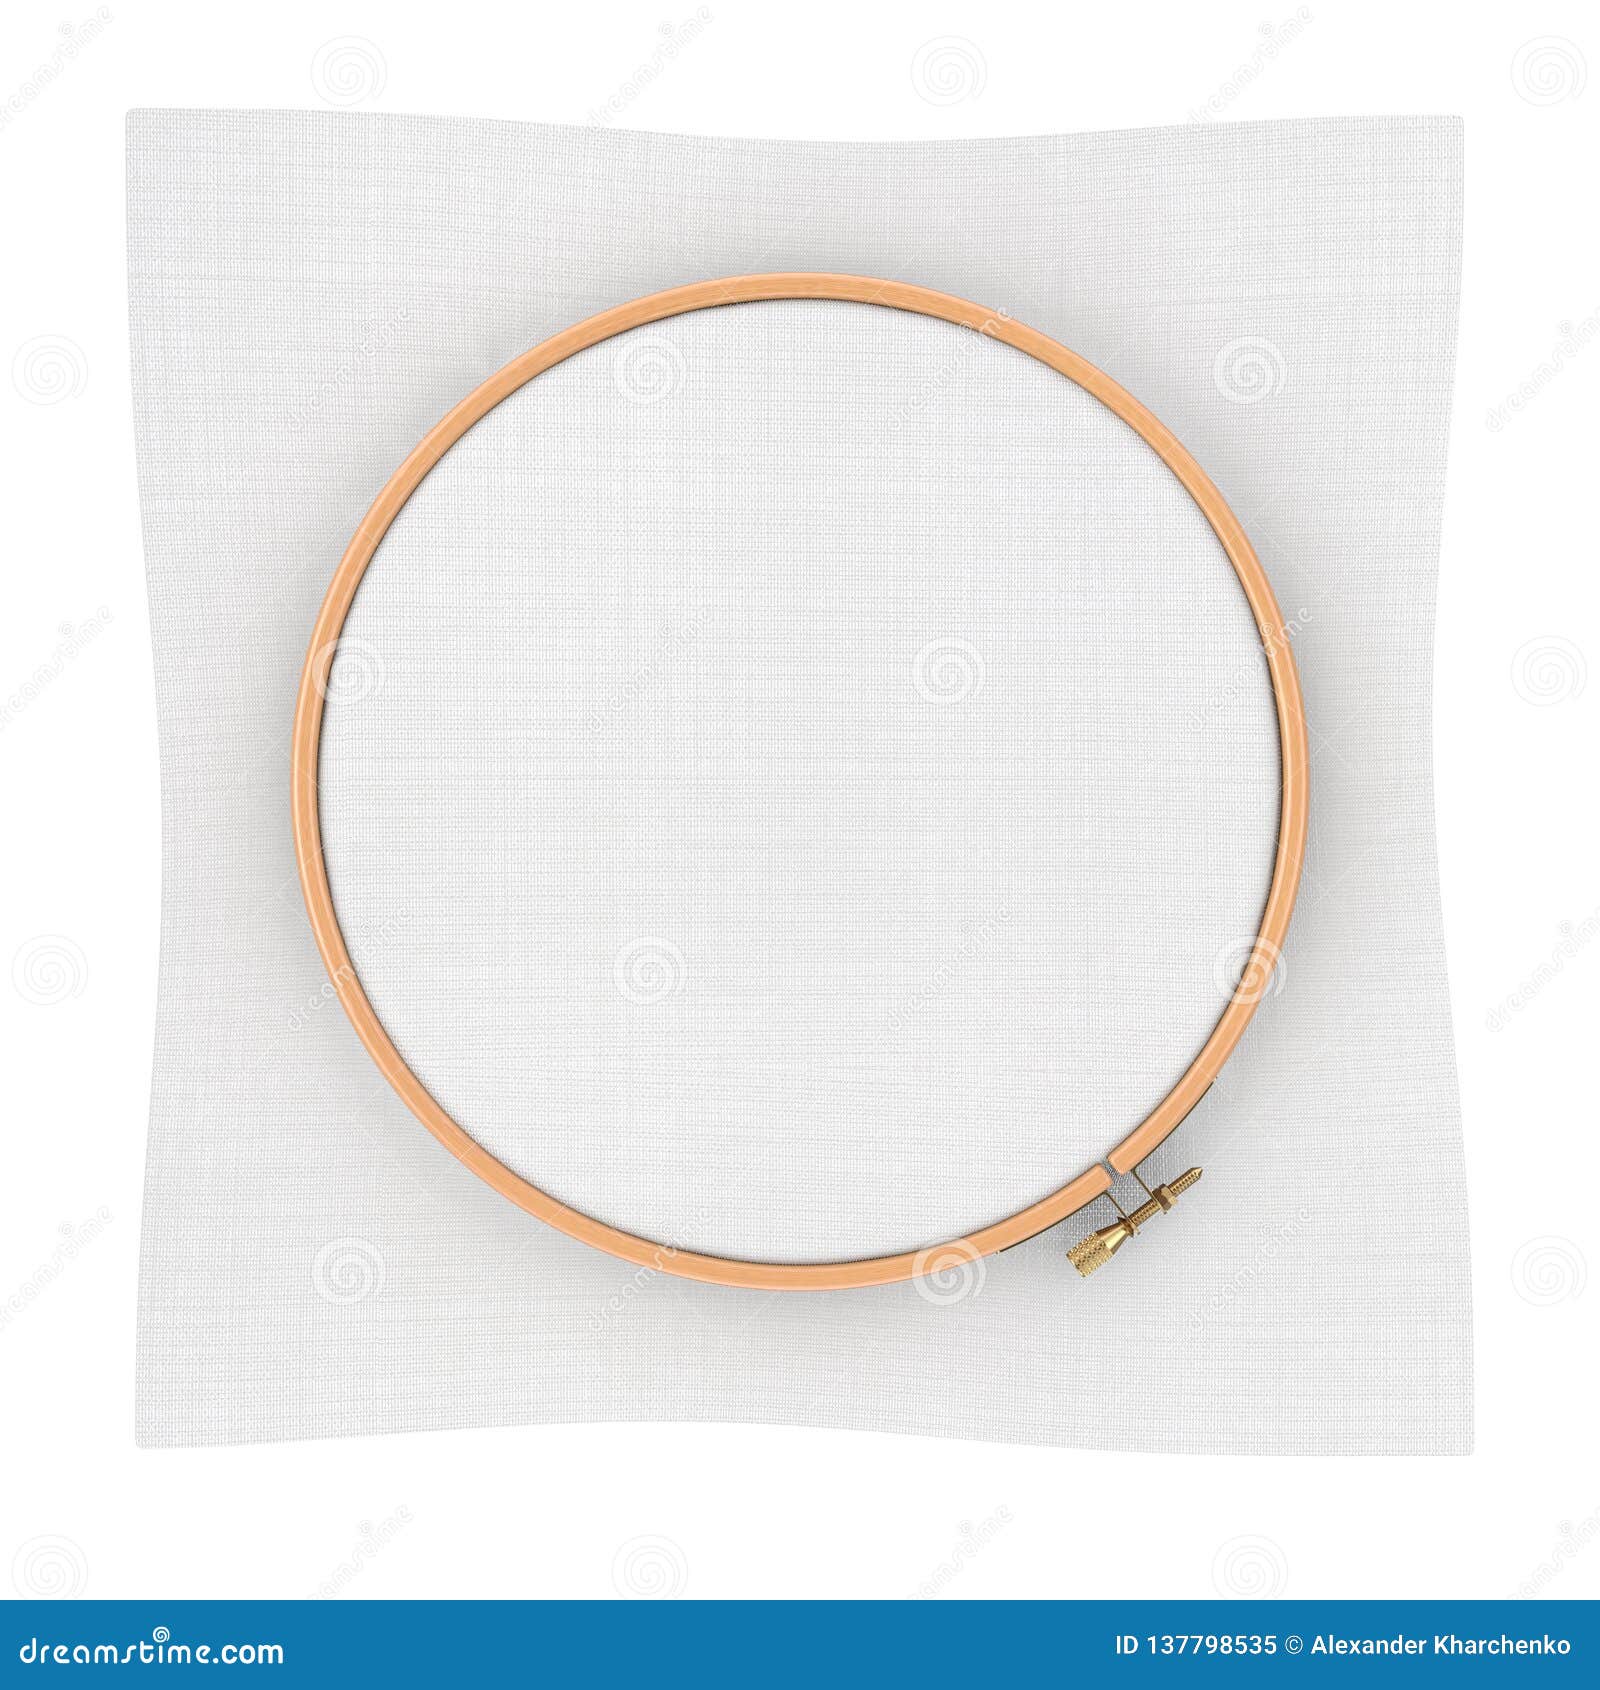 Cross Stitch Accessories On White Background Stock Photo